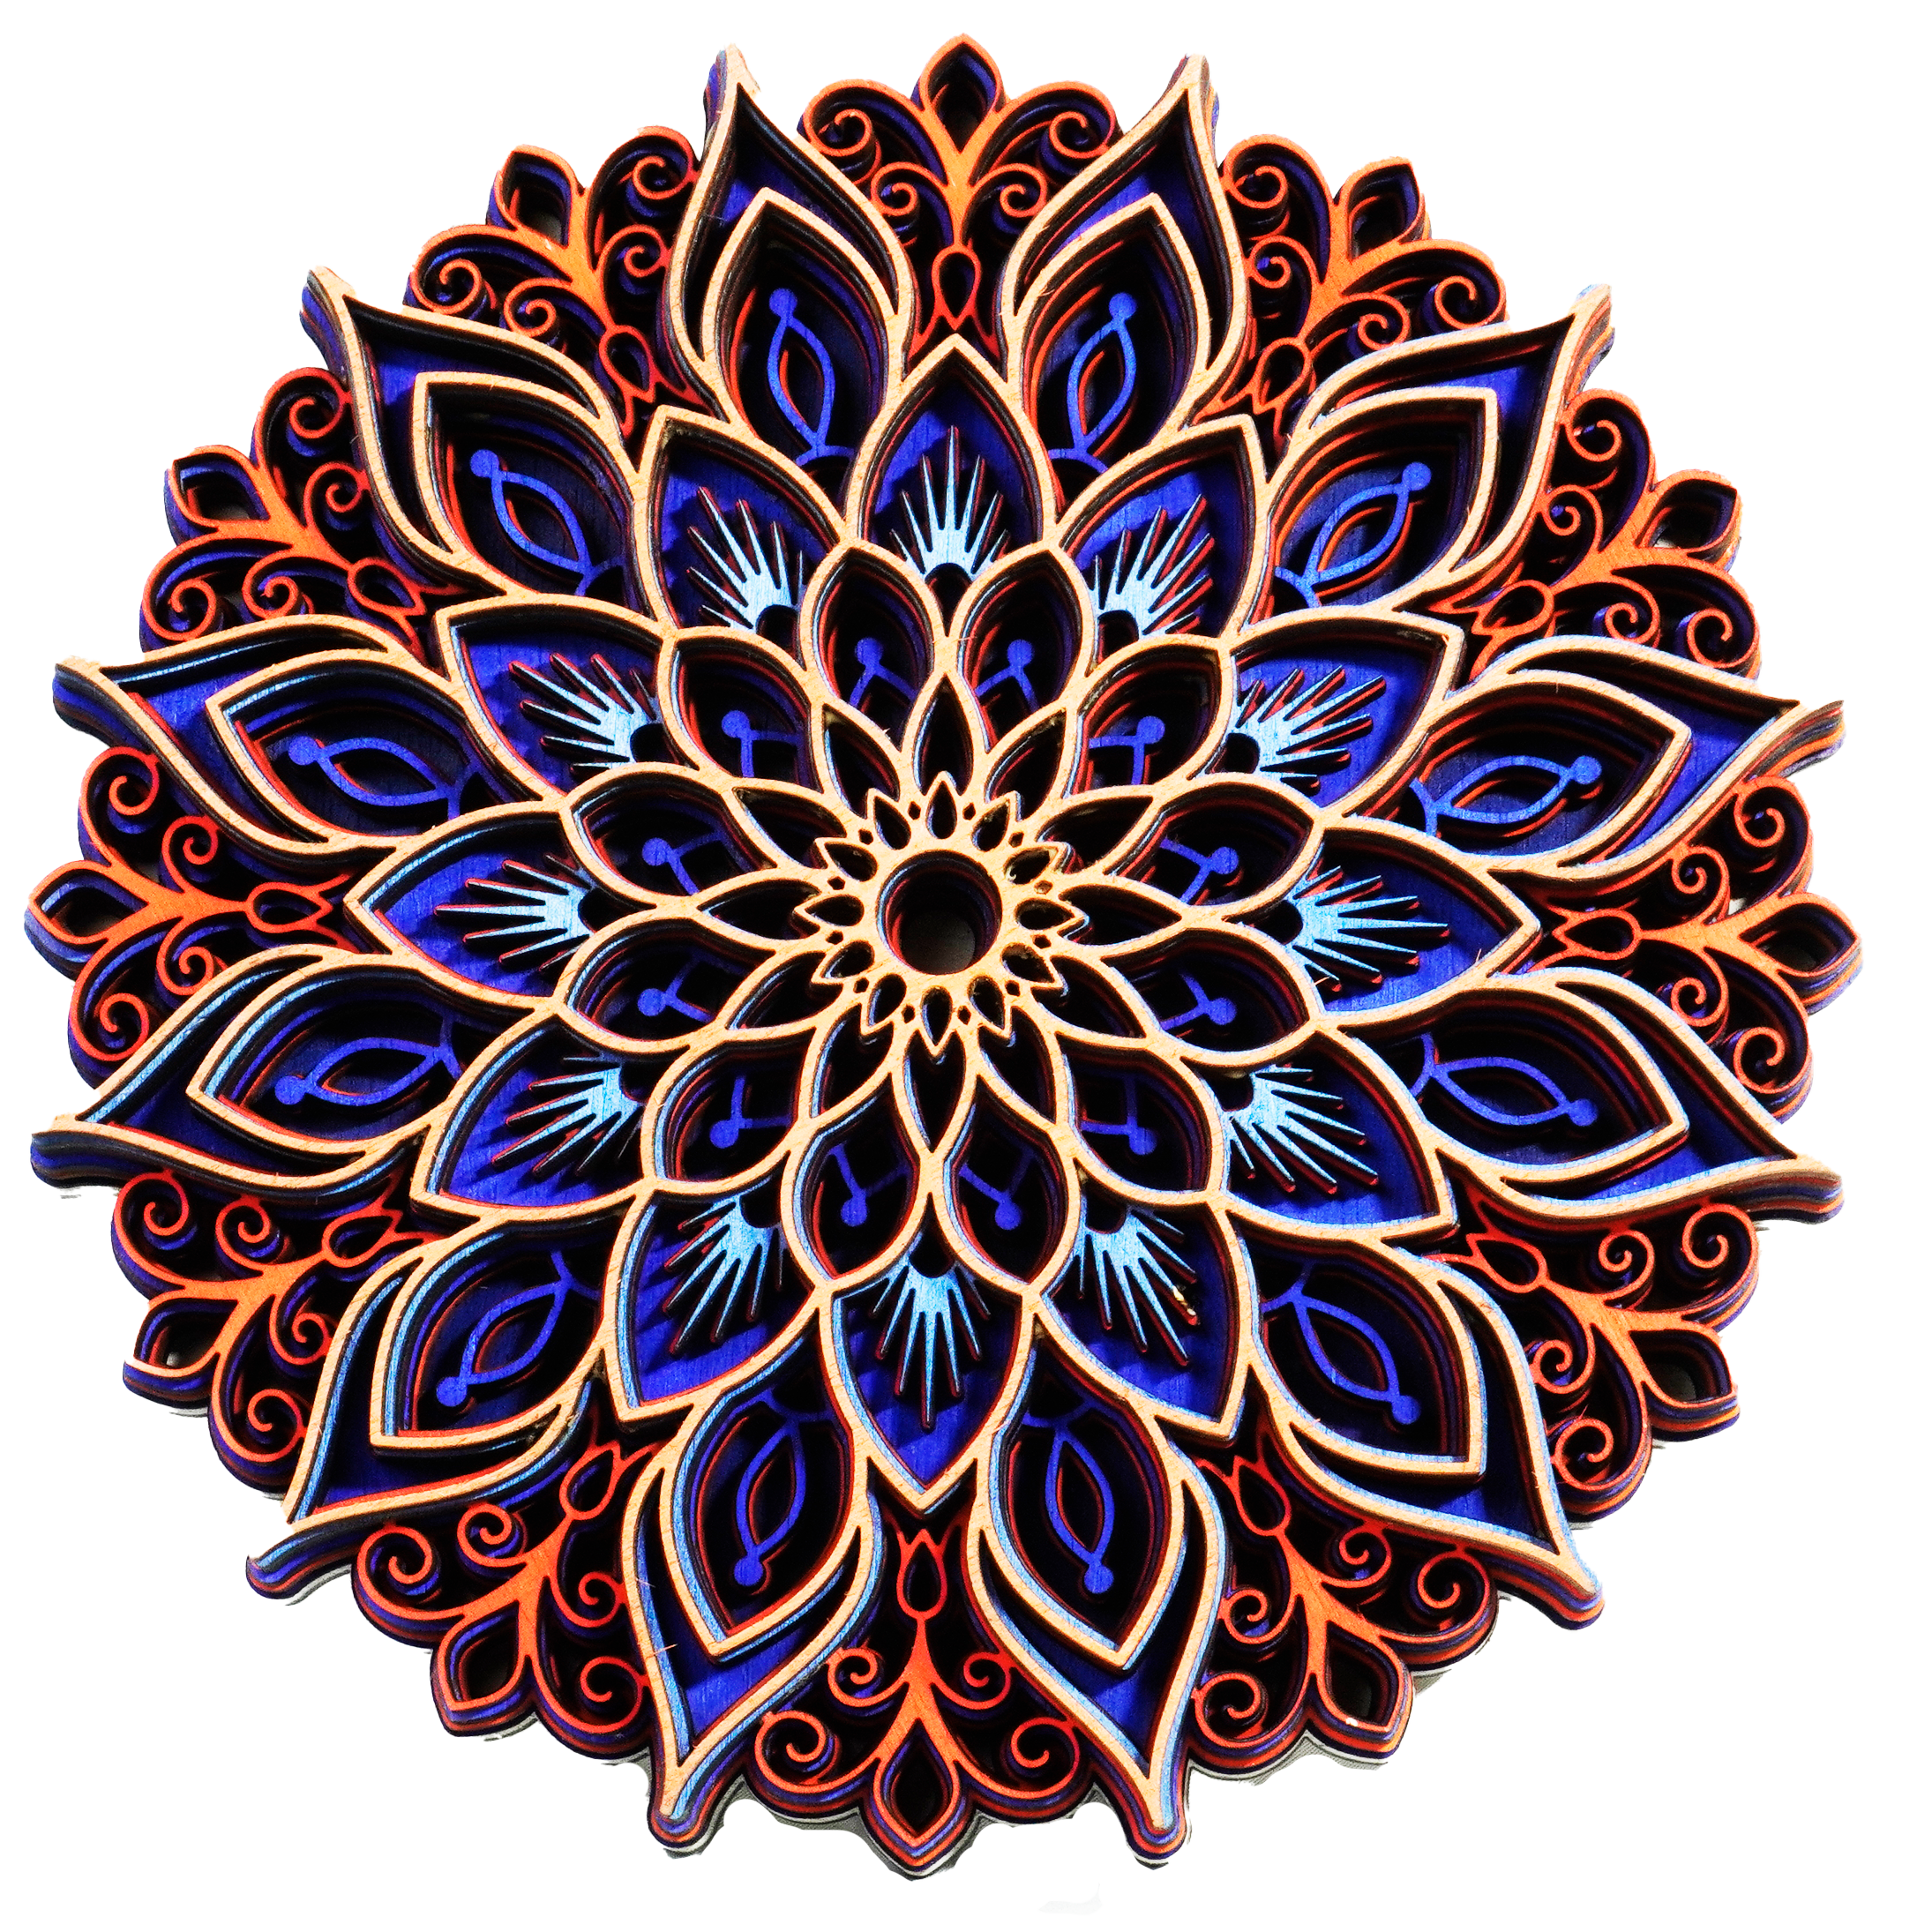 Wooden 6 Layer Mandala Painted Art Piece